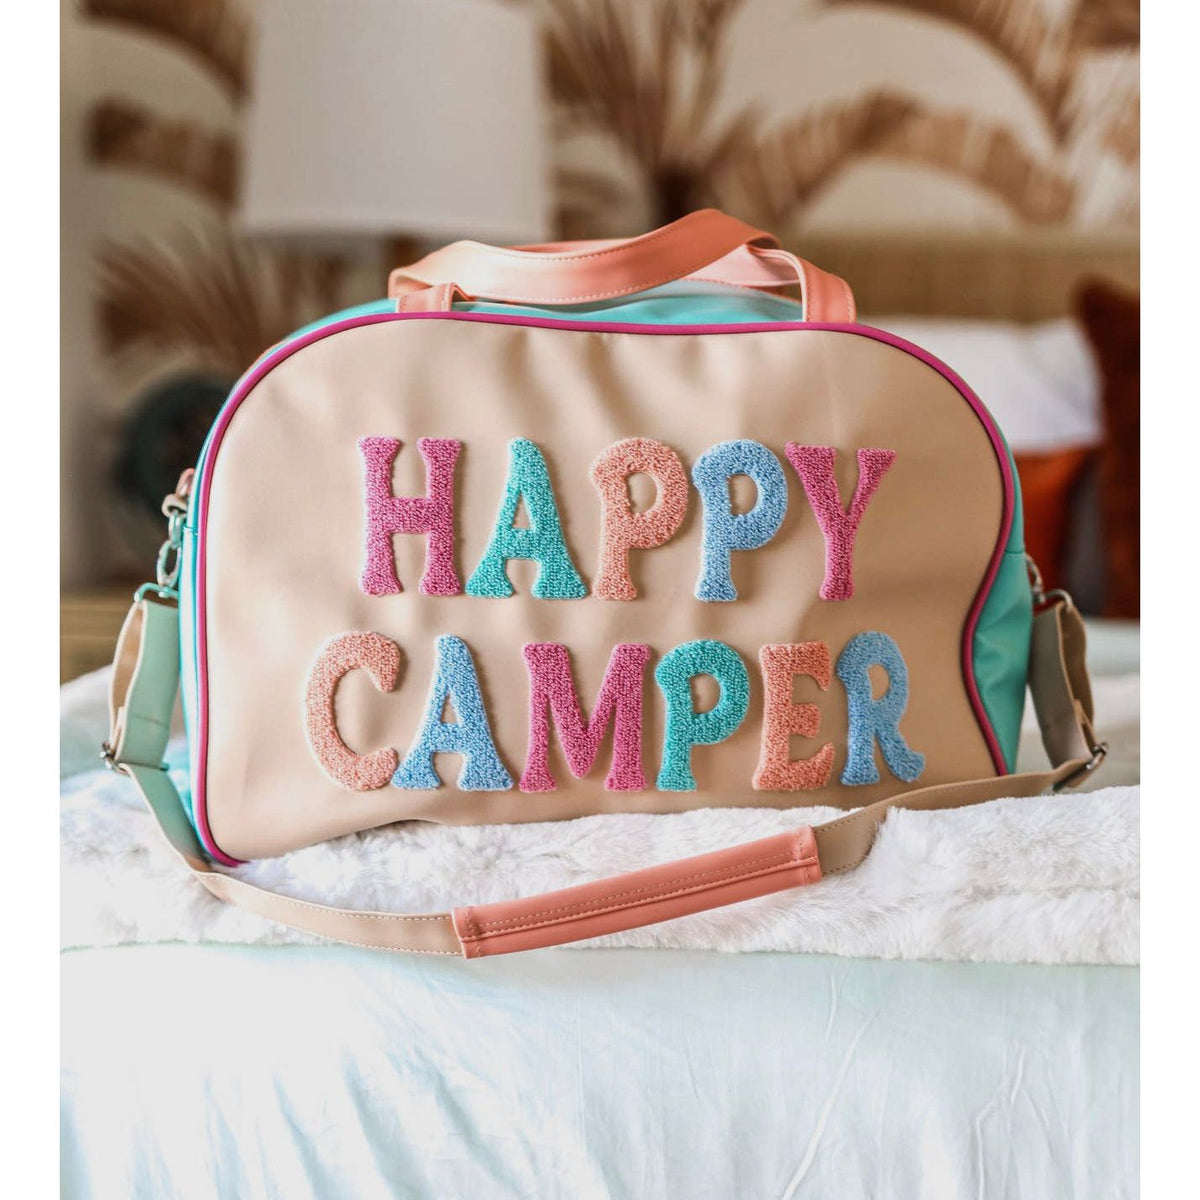 Happy Camper Weekender Bag - The Hive by Chris Jesselle